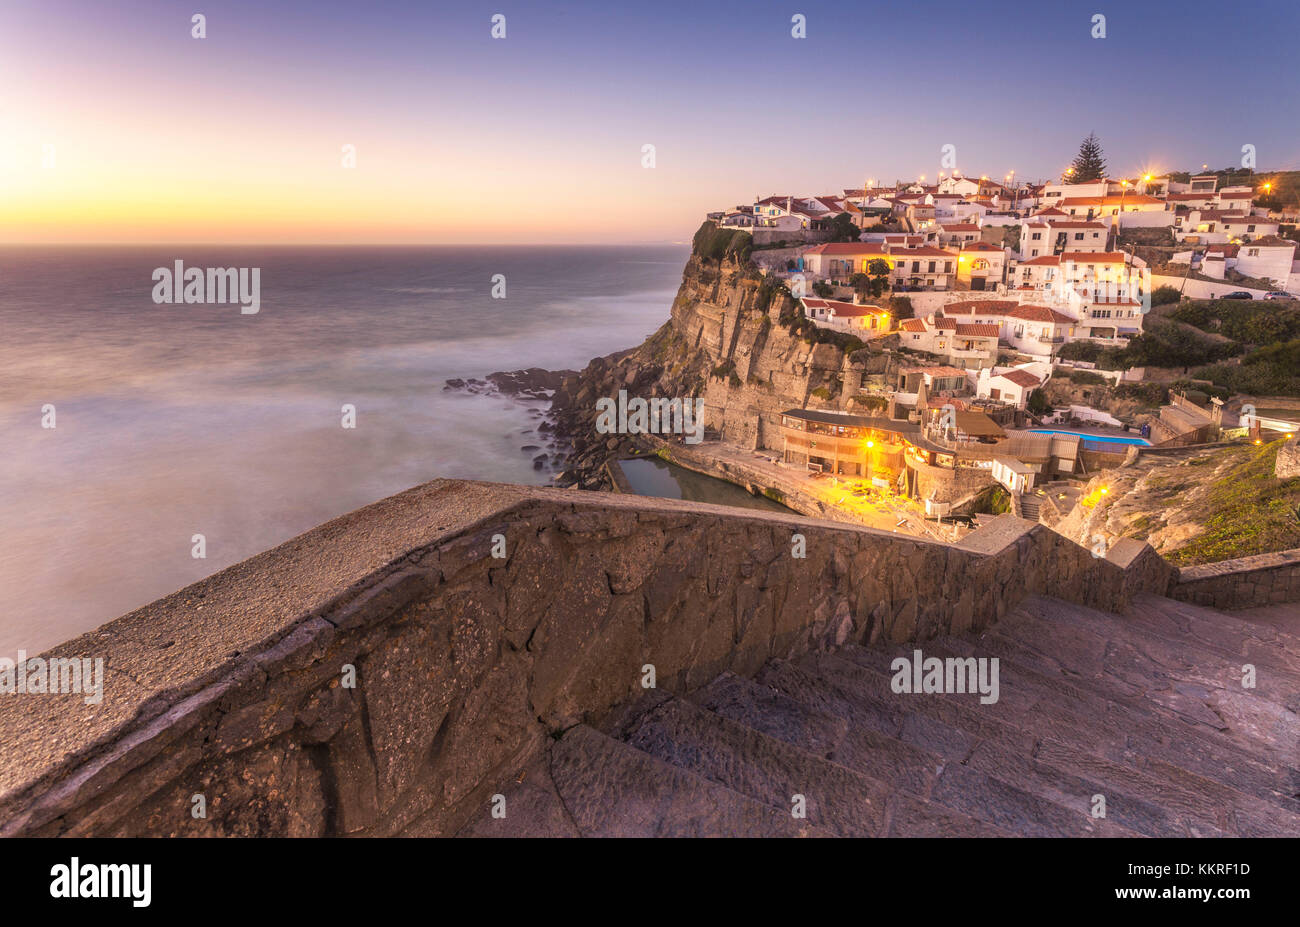 Azenhas do mar, Colares, Sintra, Lisbon district, Portugal Stock Photo